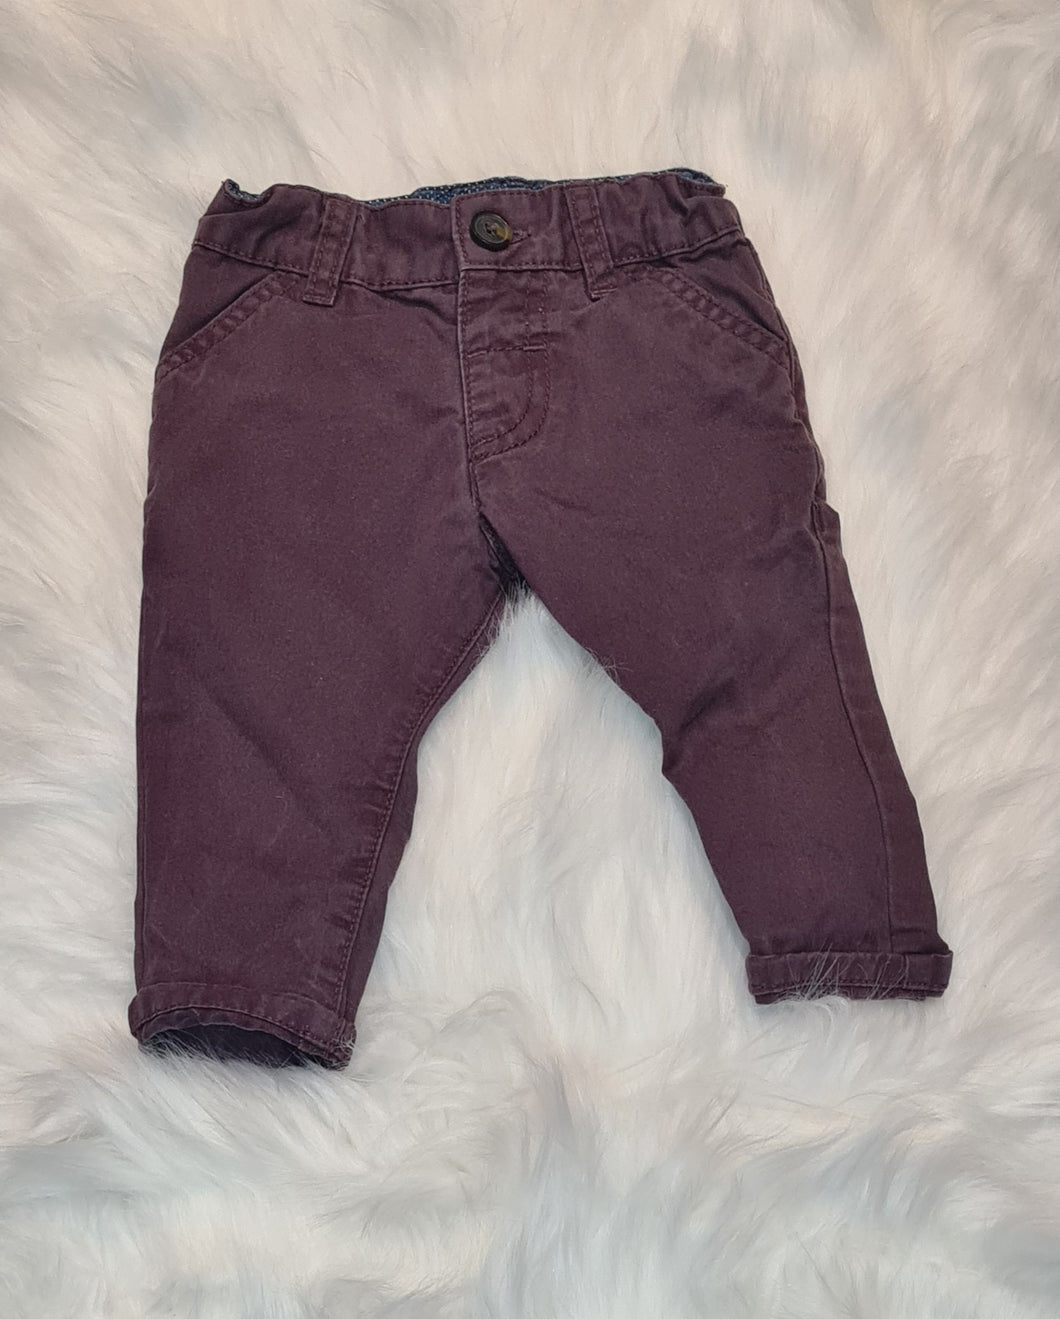 Boys 0-3 Months - Burgundy Trousers